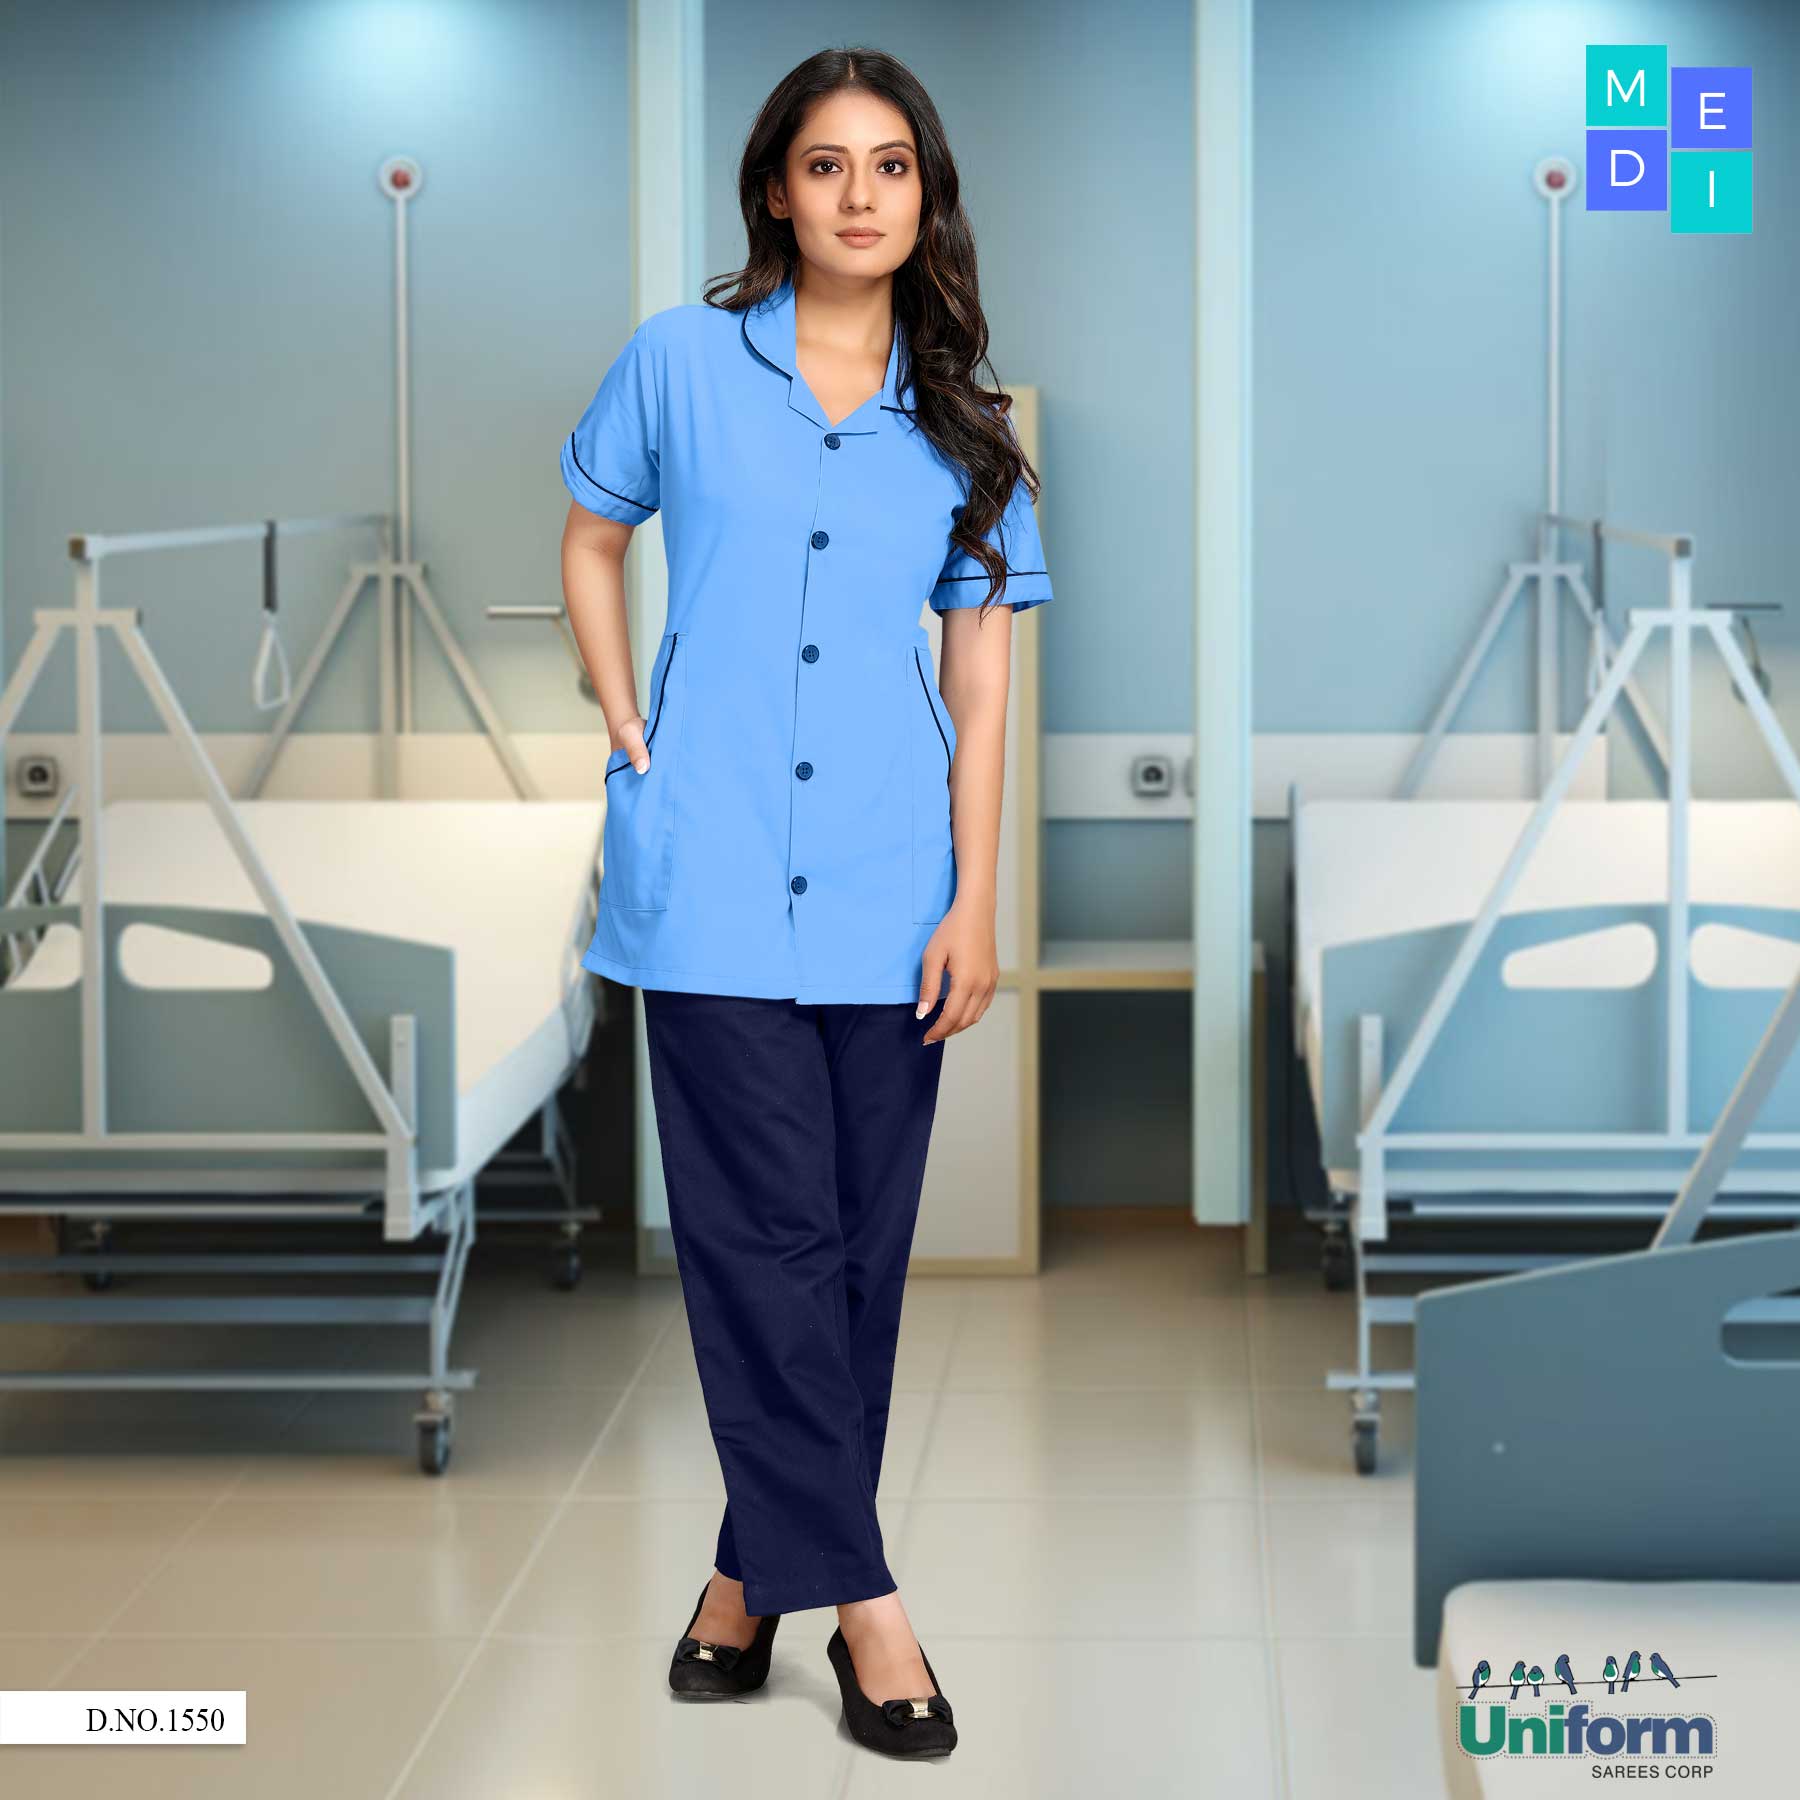 Light Blue And Navy Blue Nurse Dress For Women, Hospital Uniform